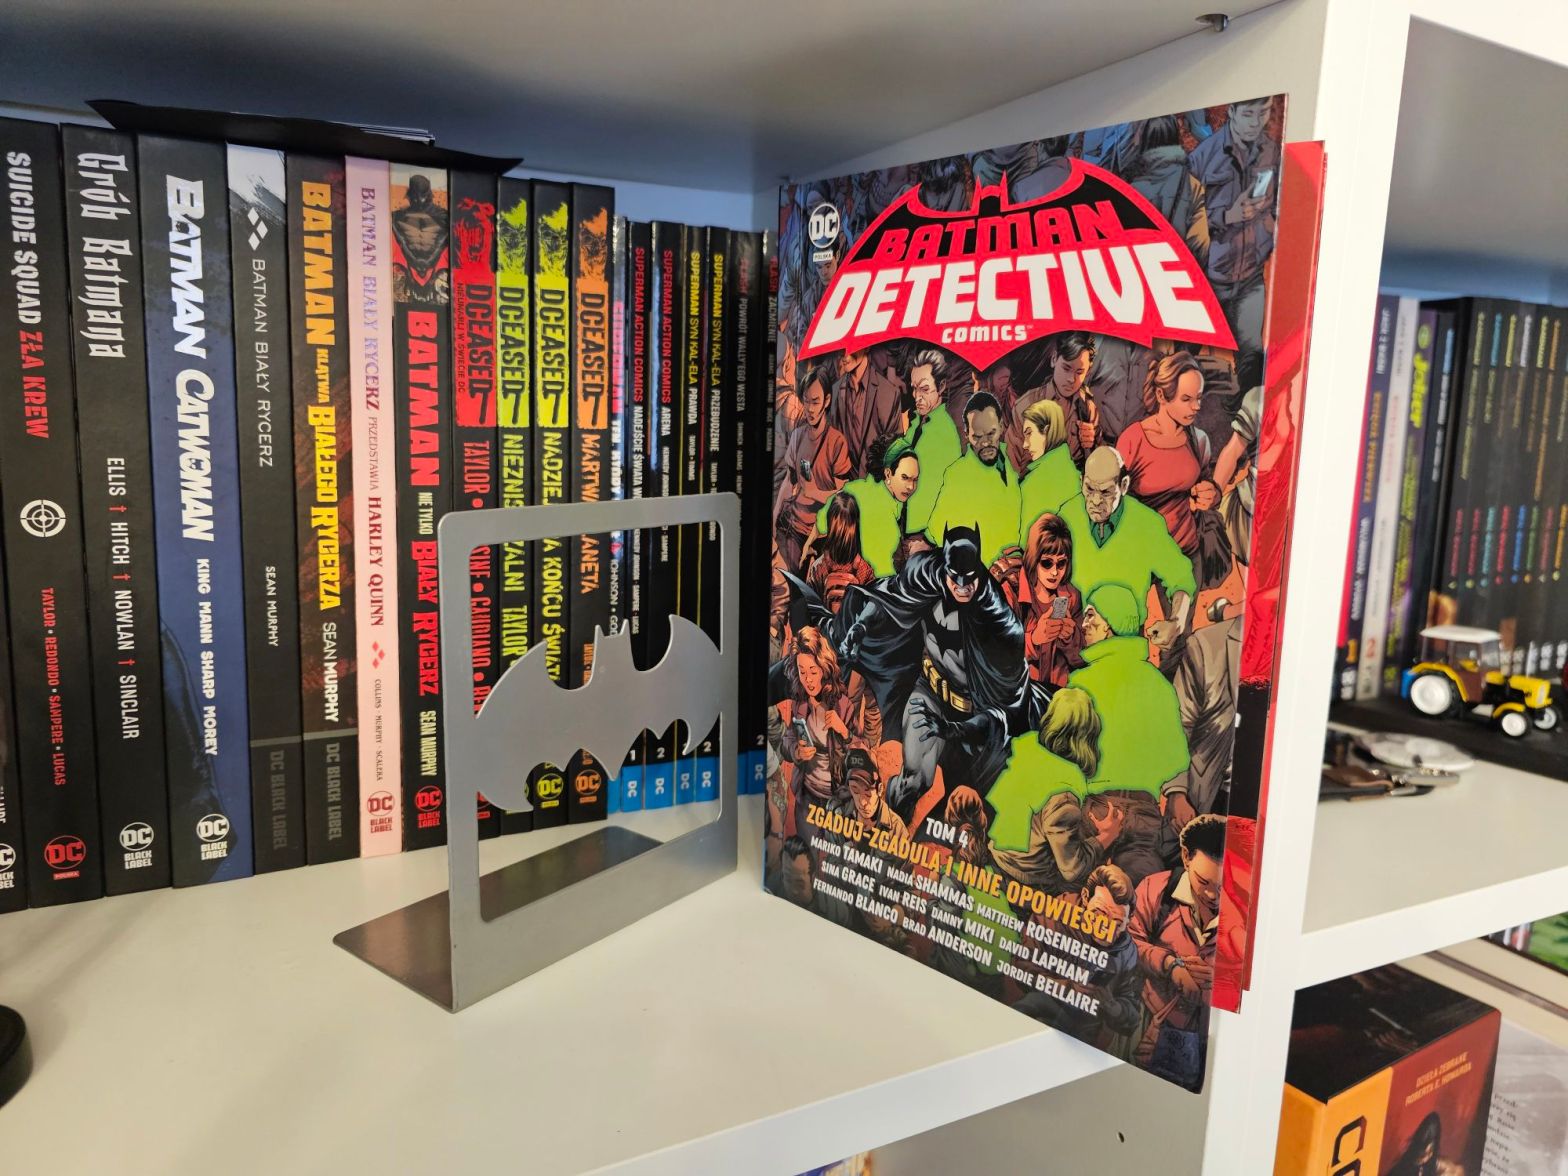 Batman Detective Comics. Tom 5. Zgaduj-zgadula i inne opowieści